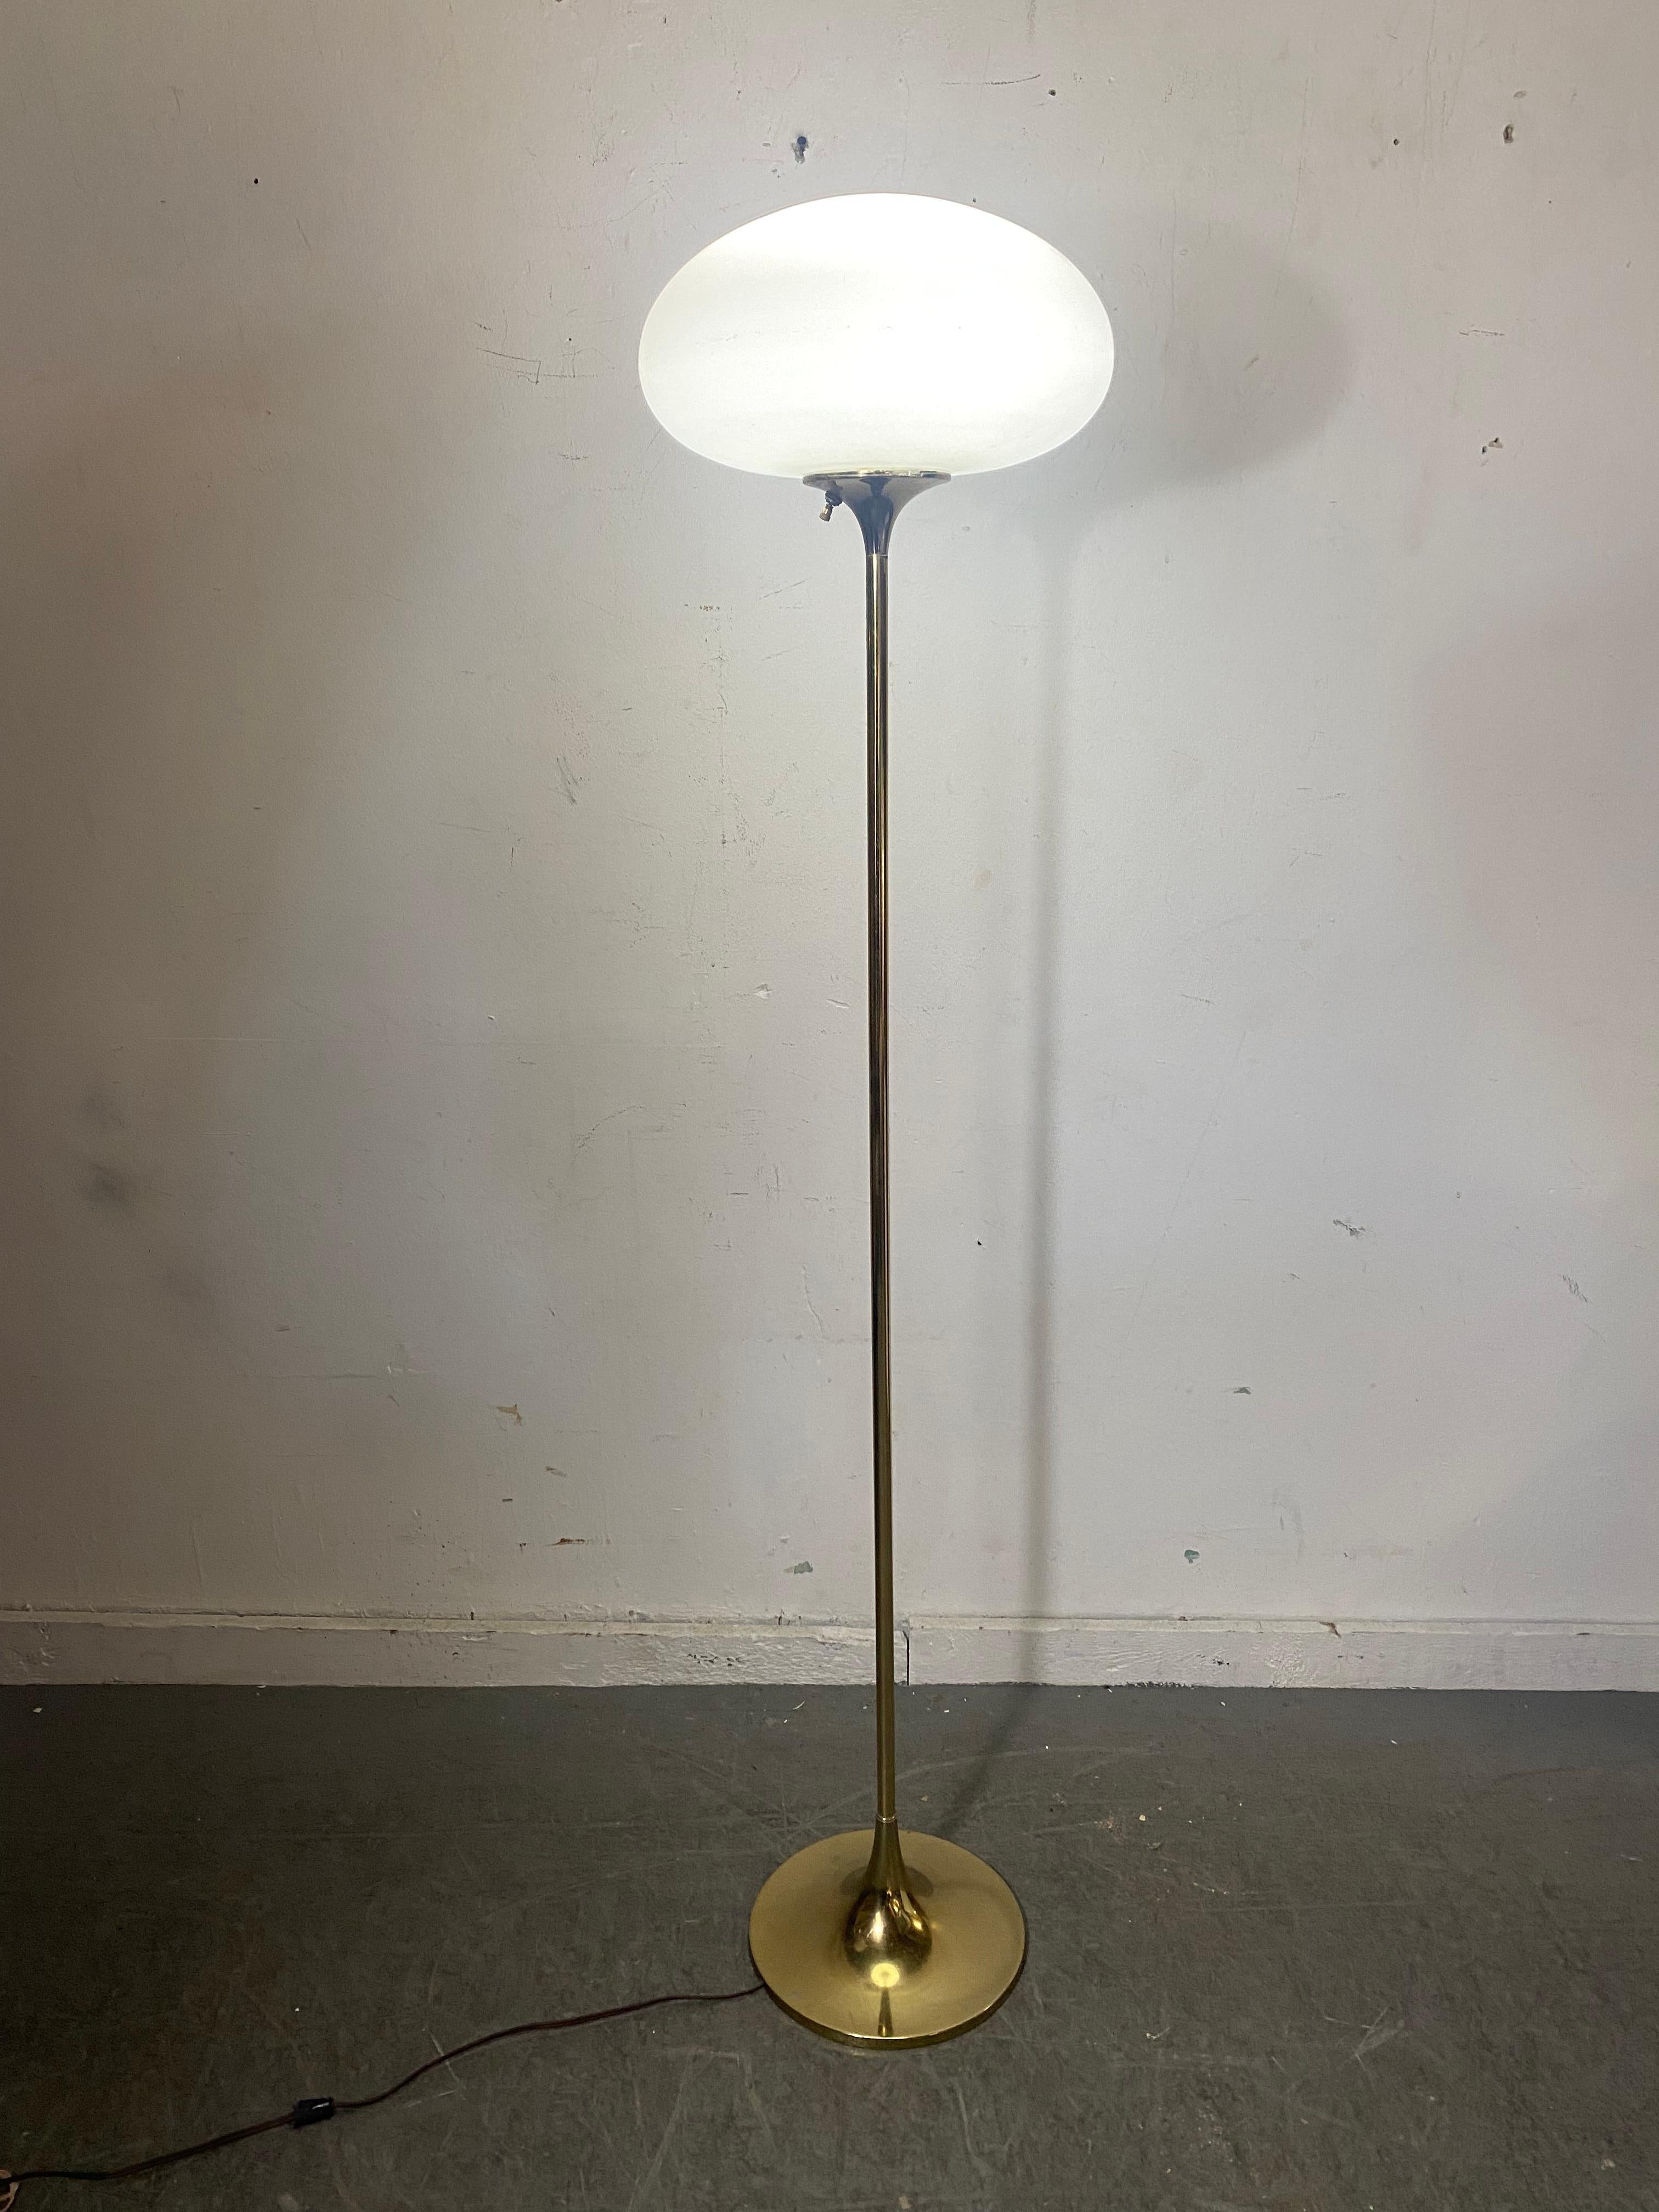 Iconic 1960s Floor Lamp by Laurel, Gold Standard, Blown Glass Mushroom Shade 1